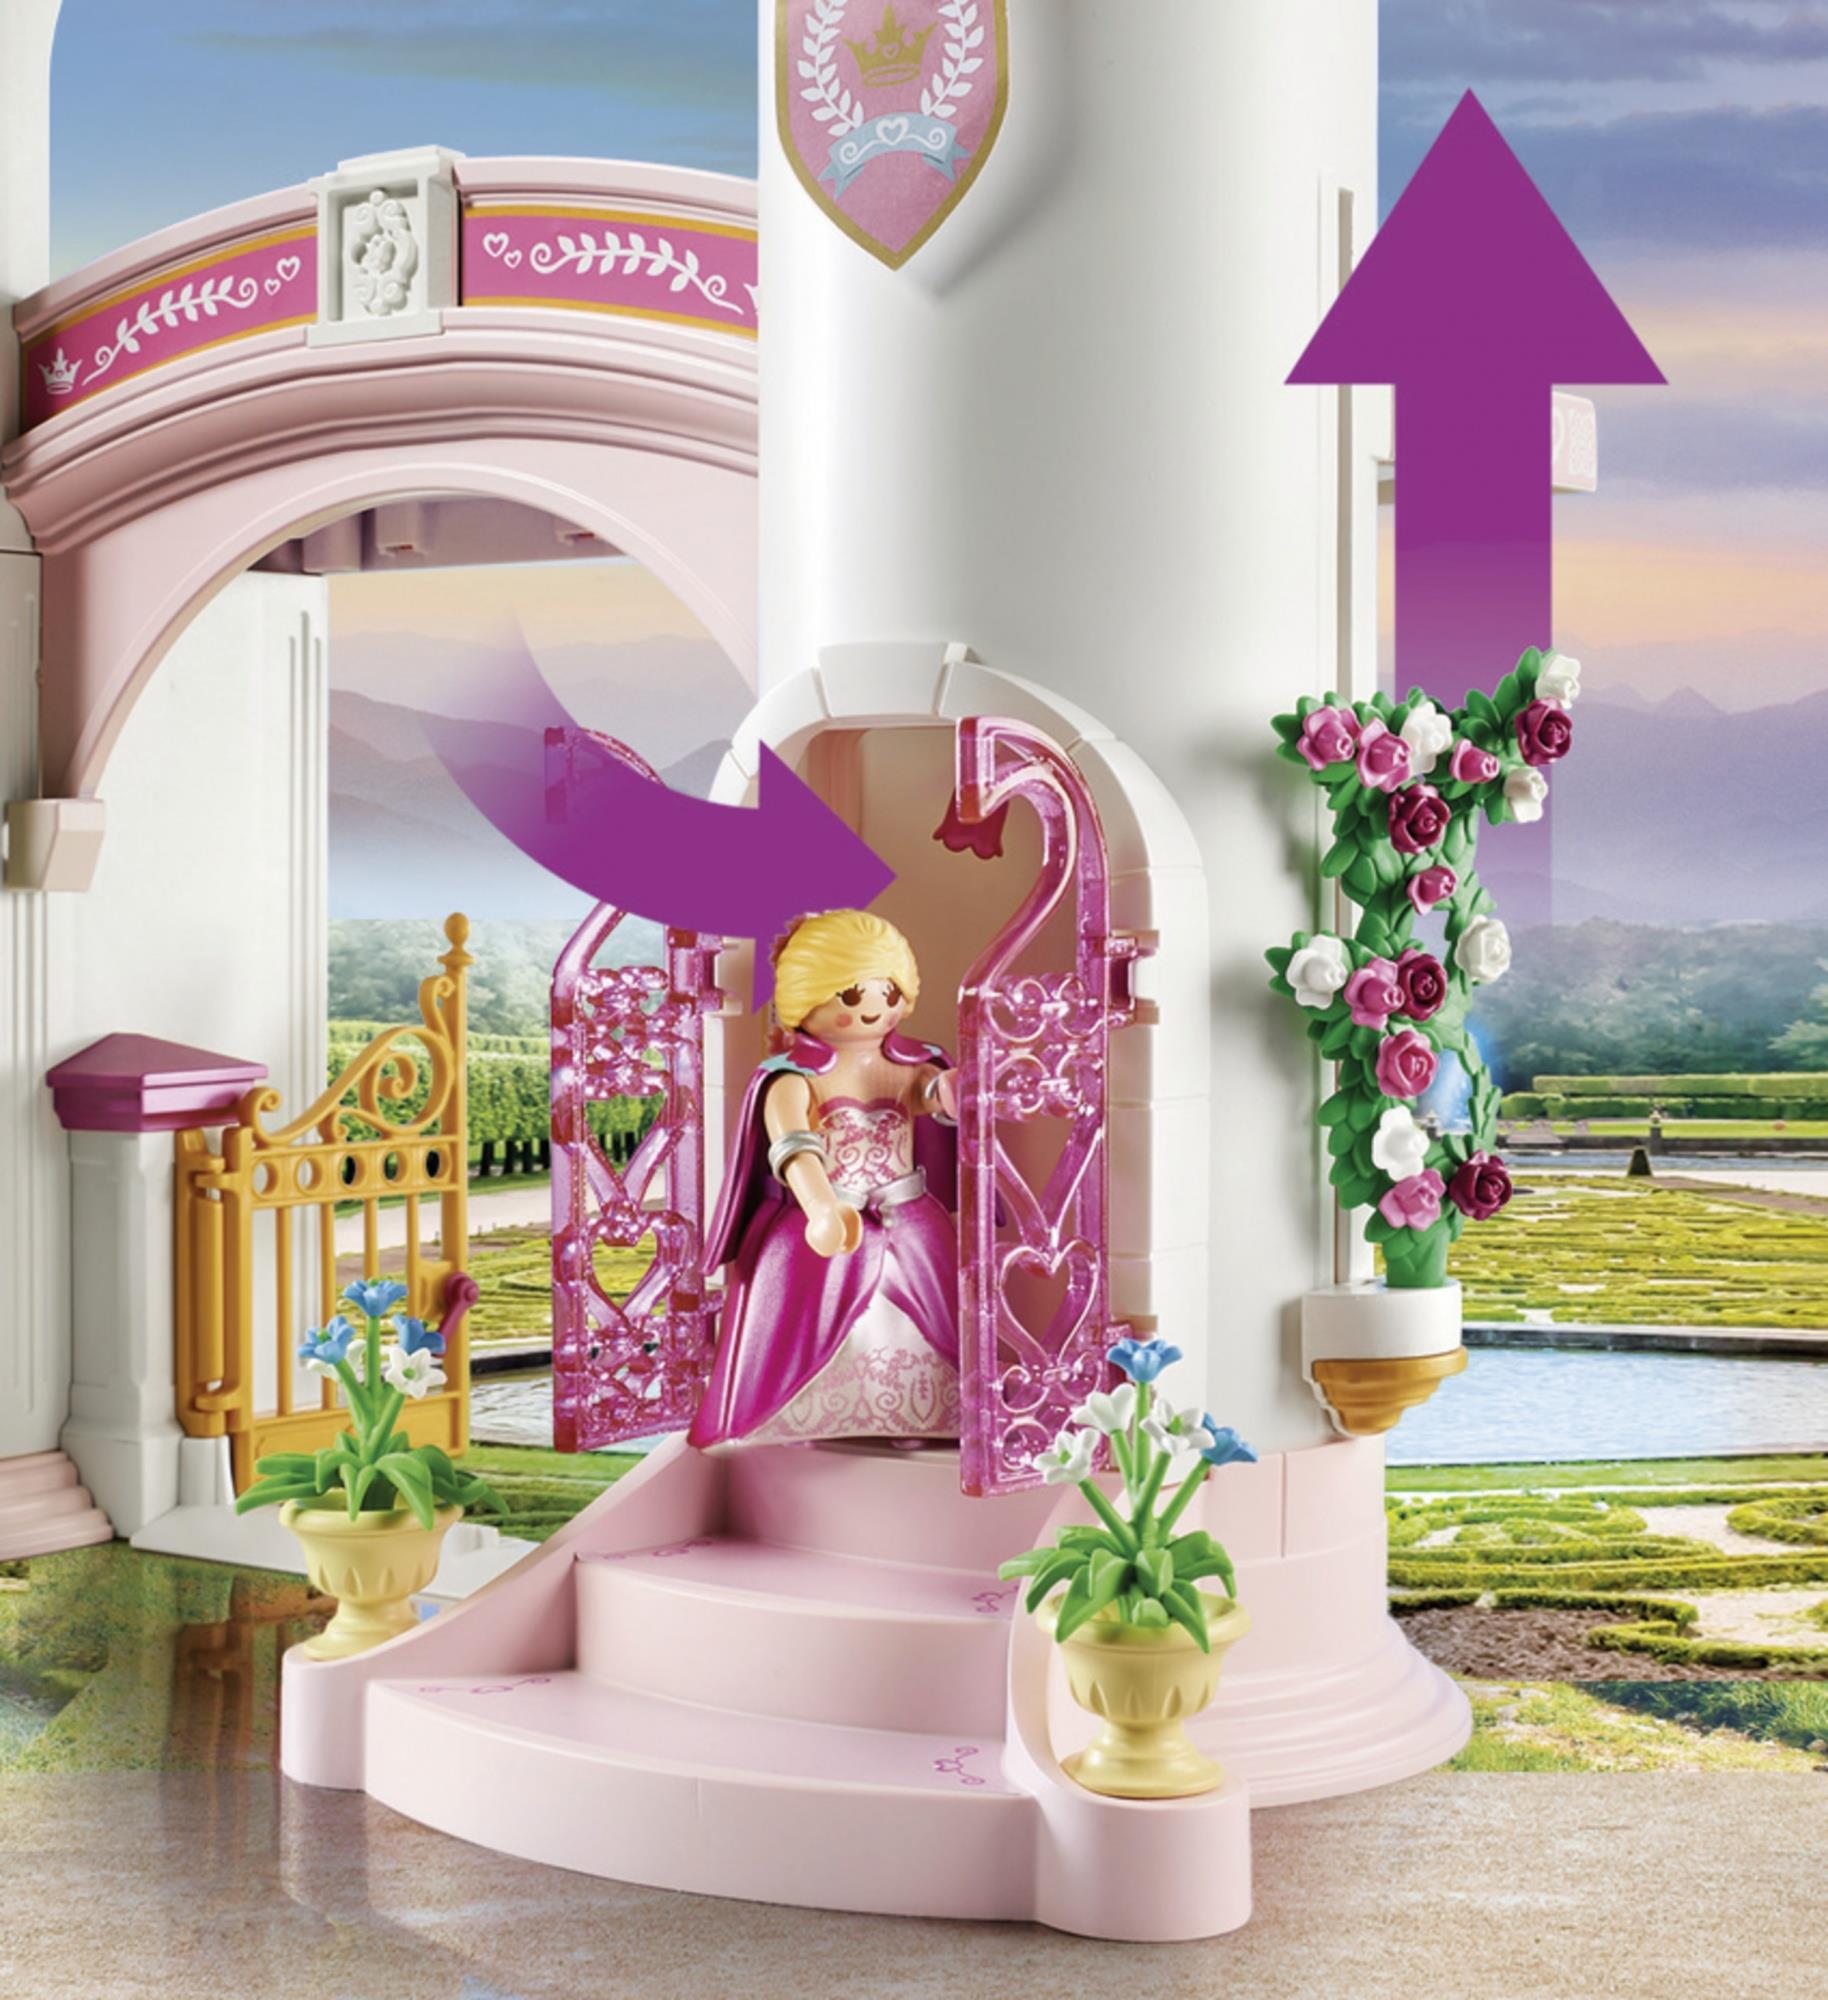 Playmobil Princess Castle (70448)